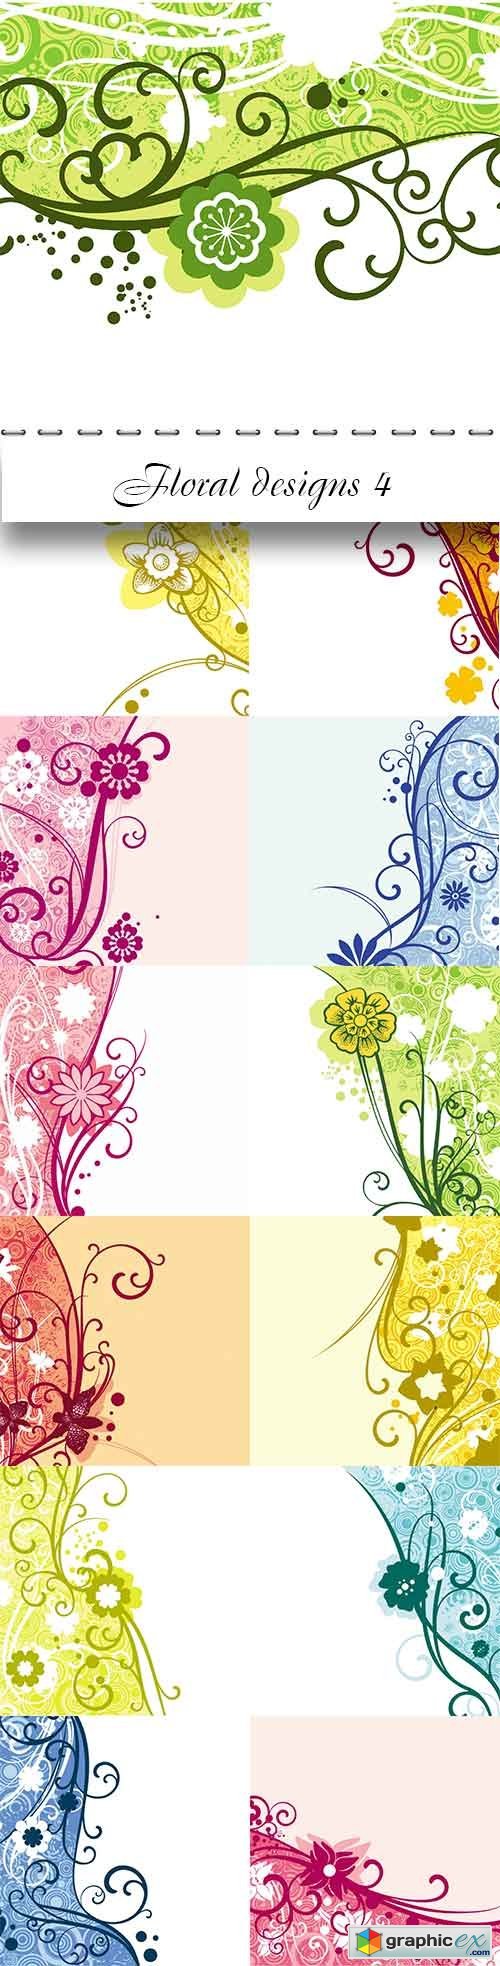 Floral designs 4